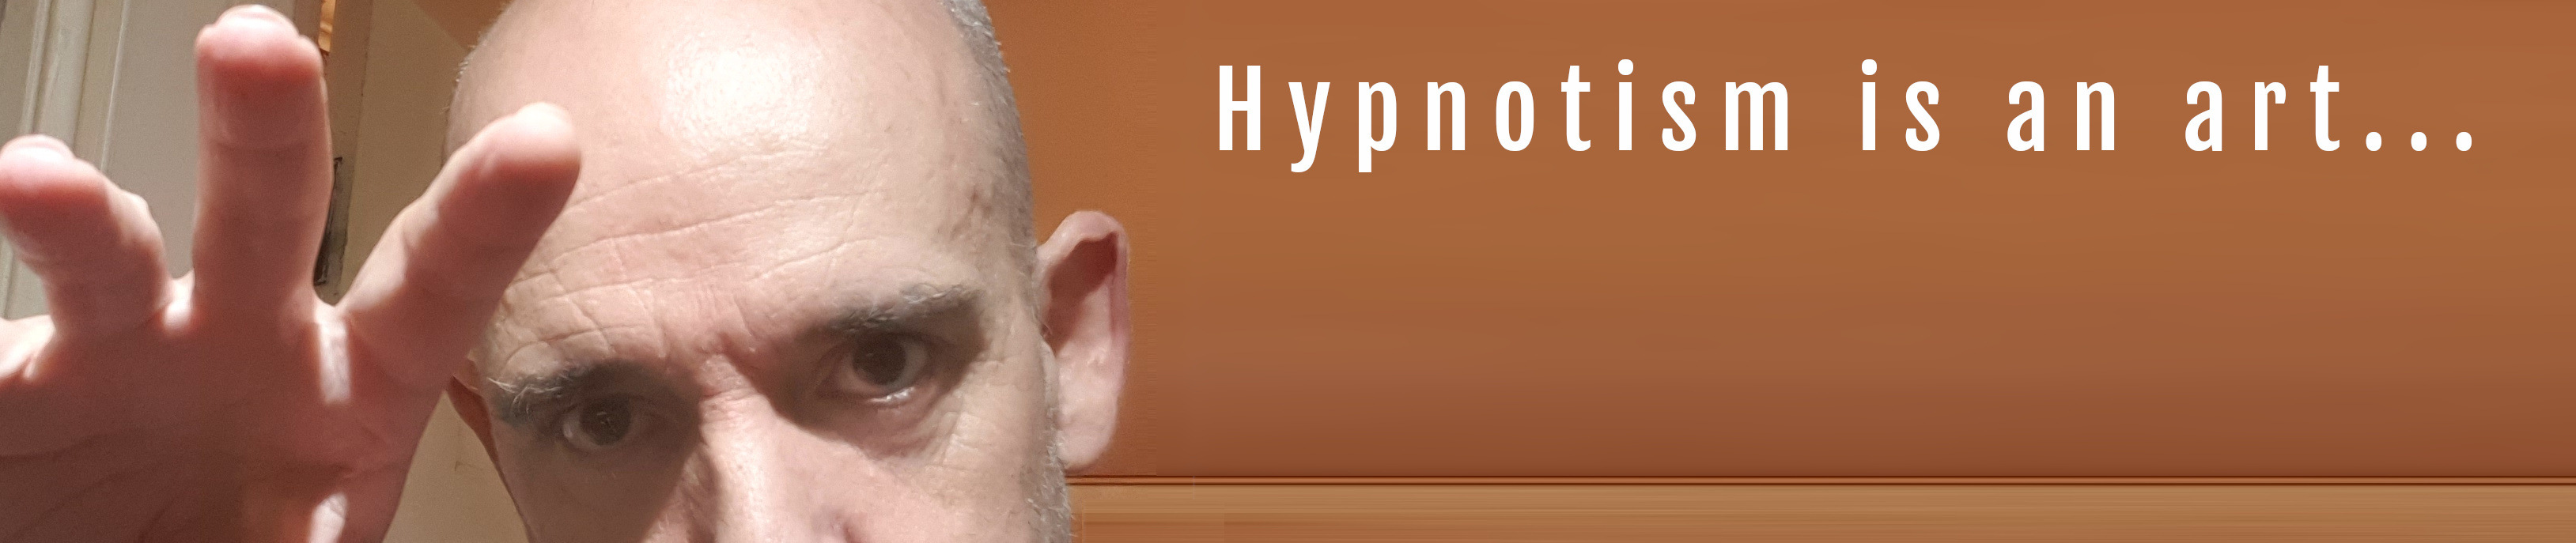 hypnotism training